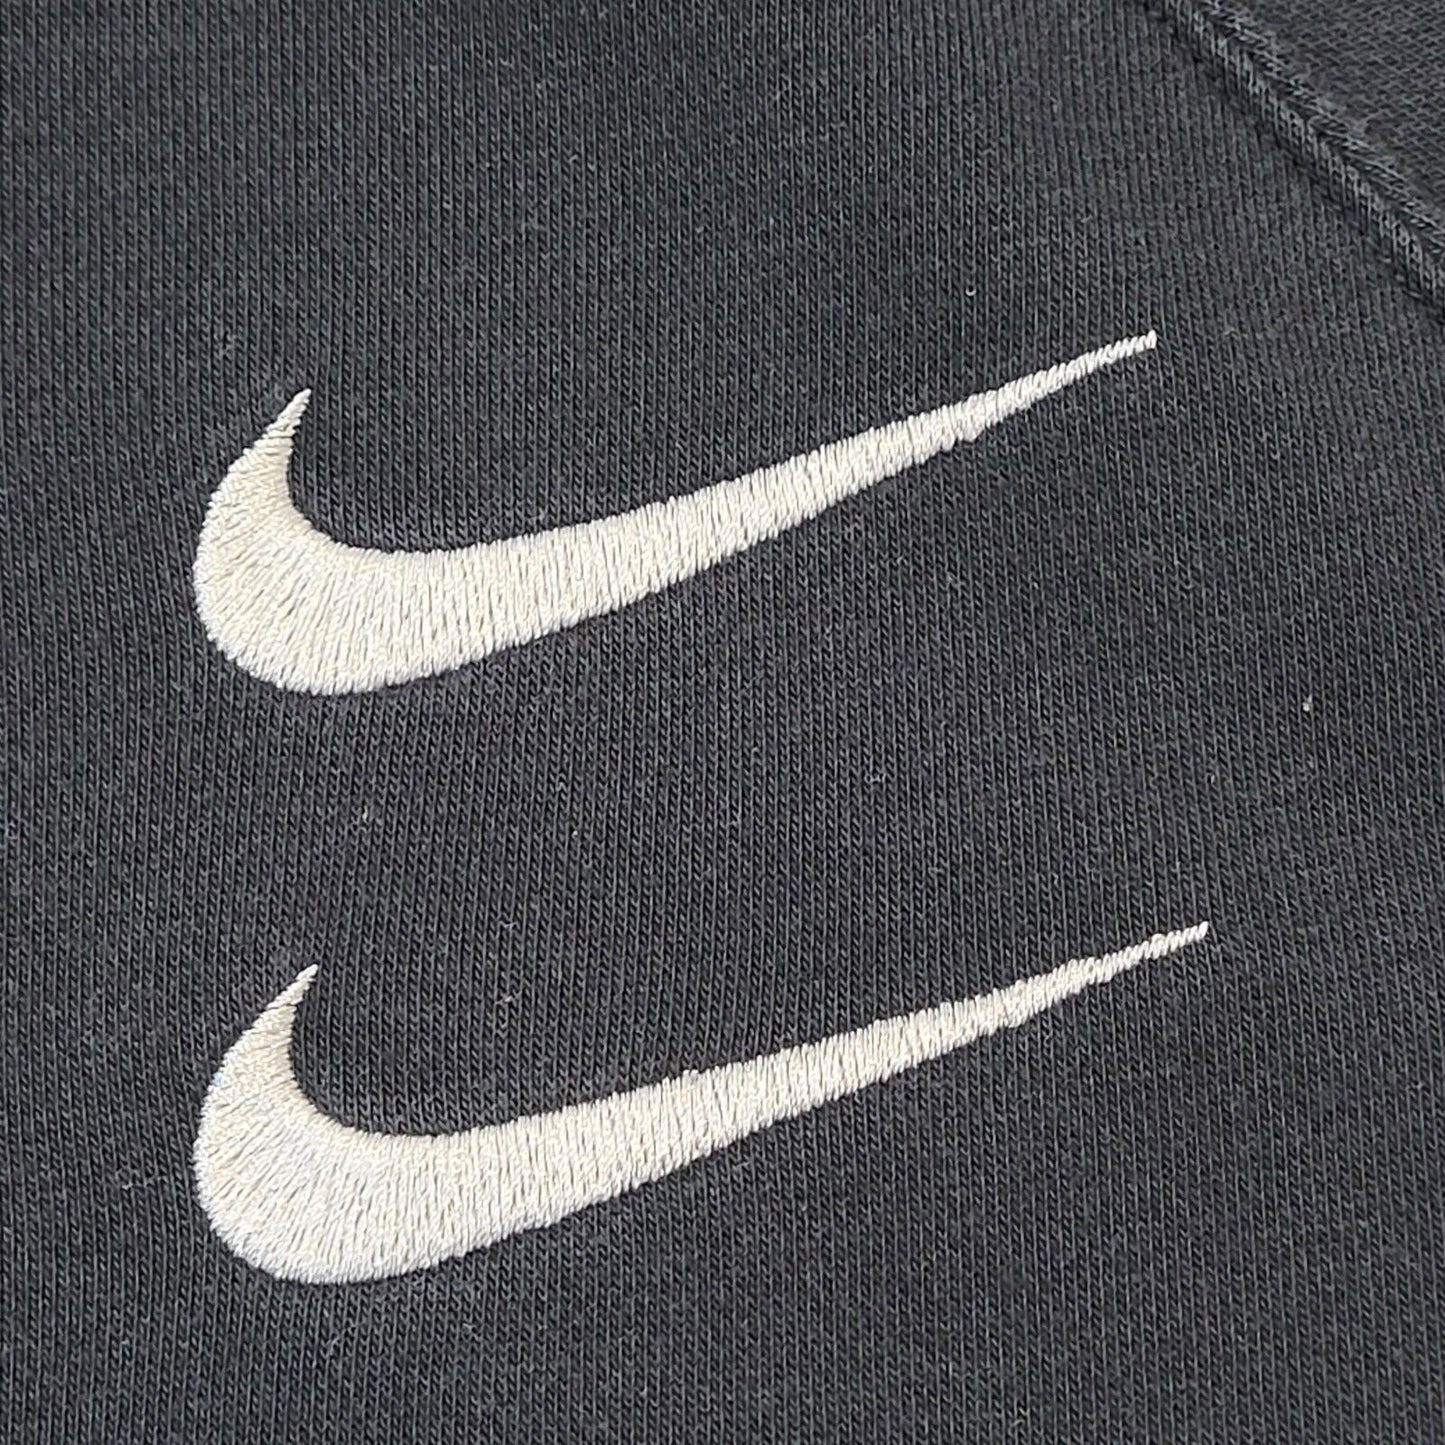 Nike Sweatshirt (XL)